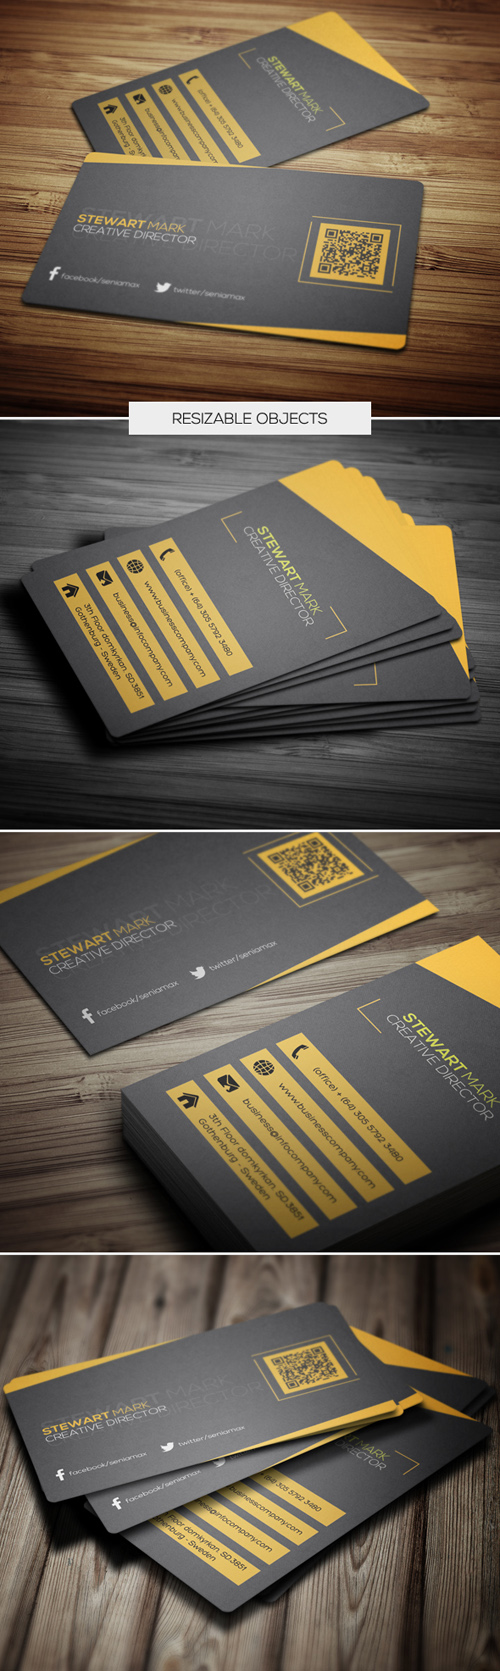 Creative Director Business Cards Design-5